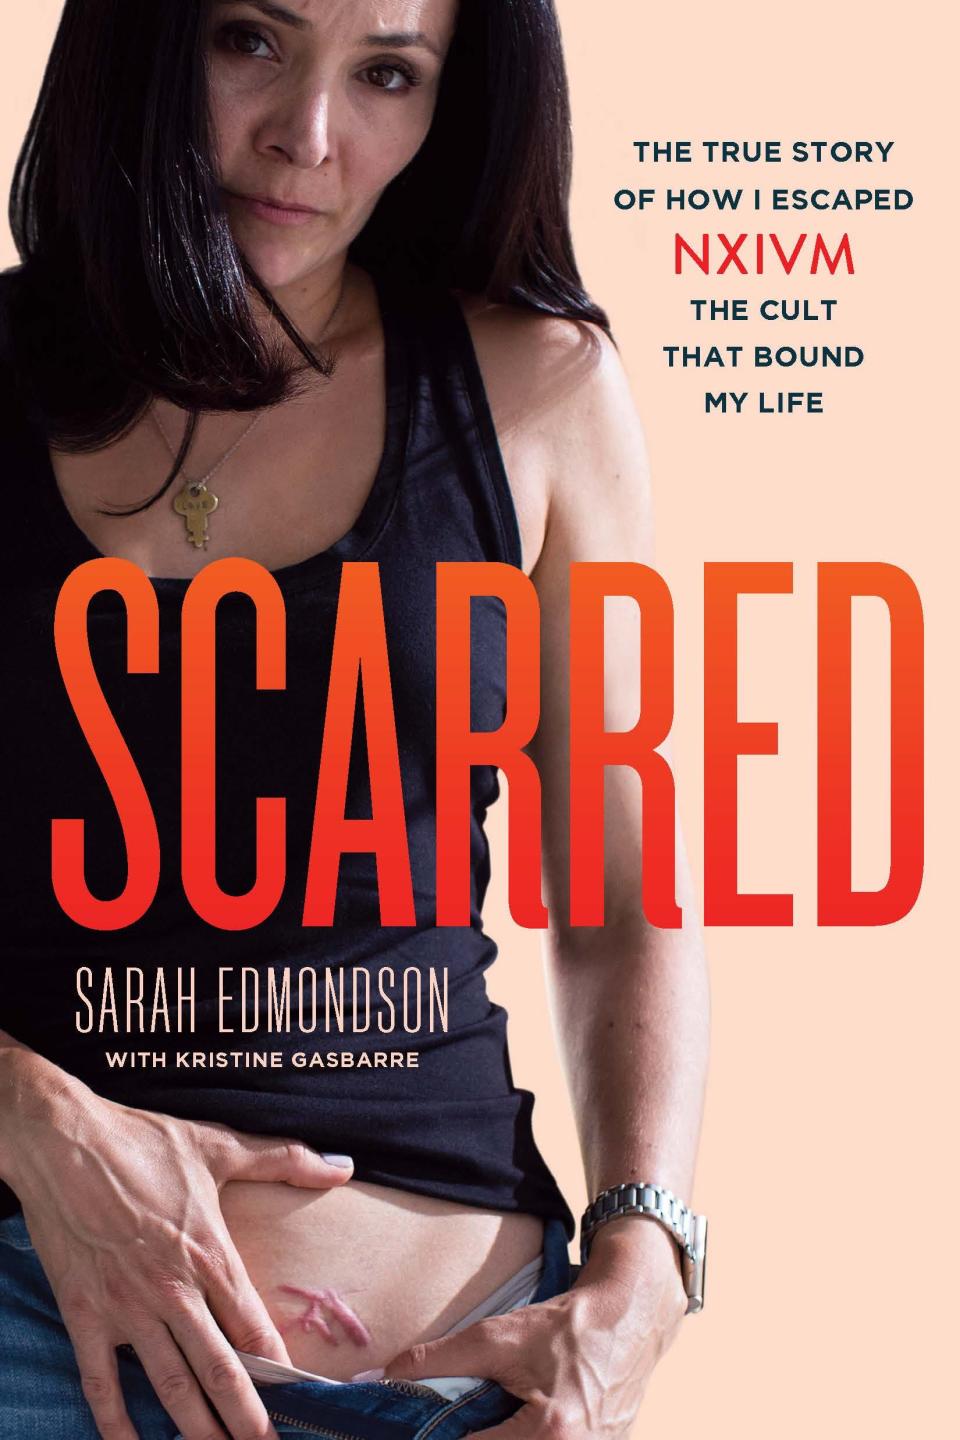 Scarred sarah edmondson NXIVM book